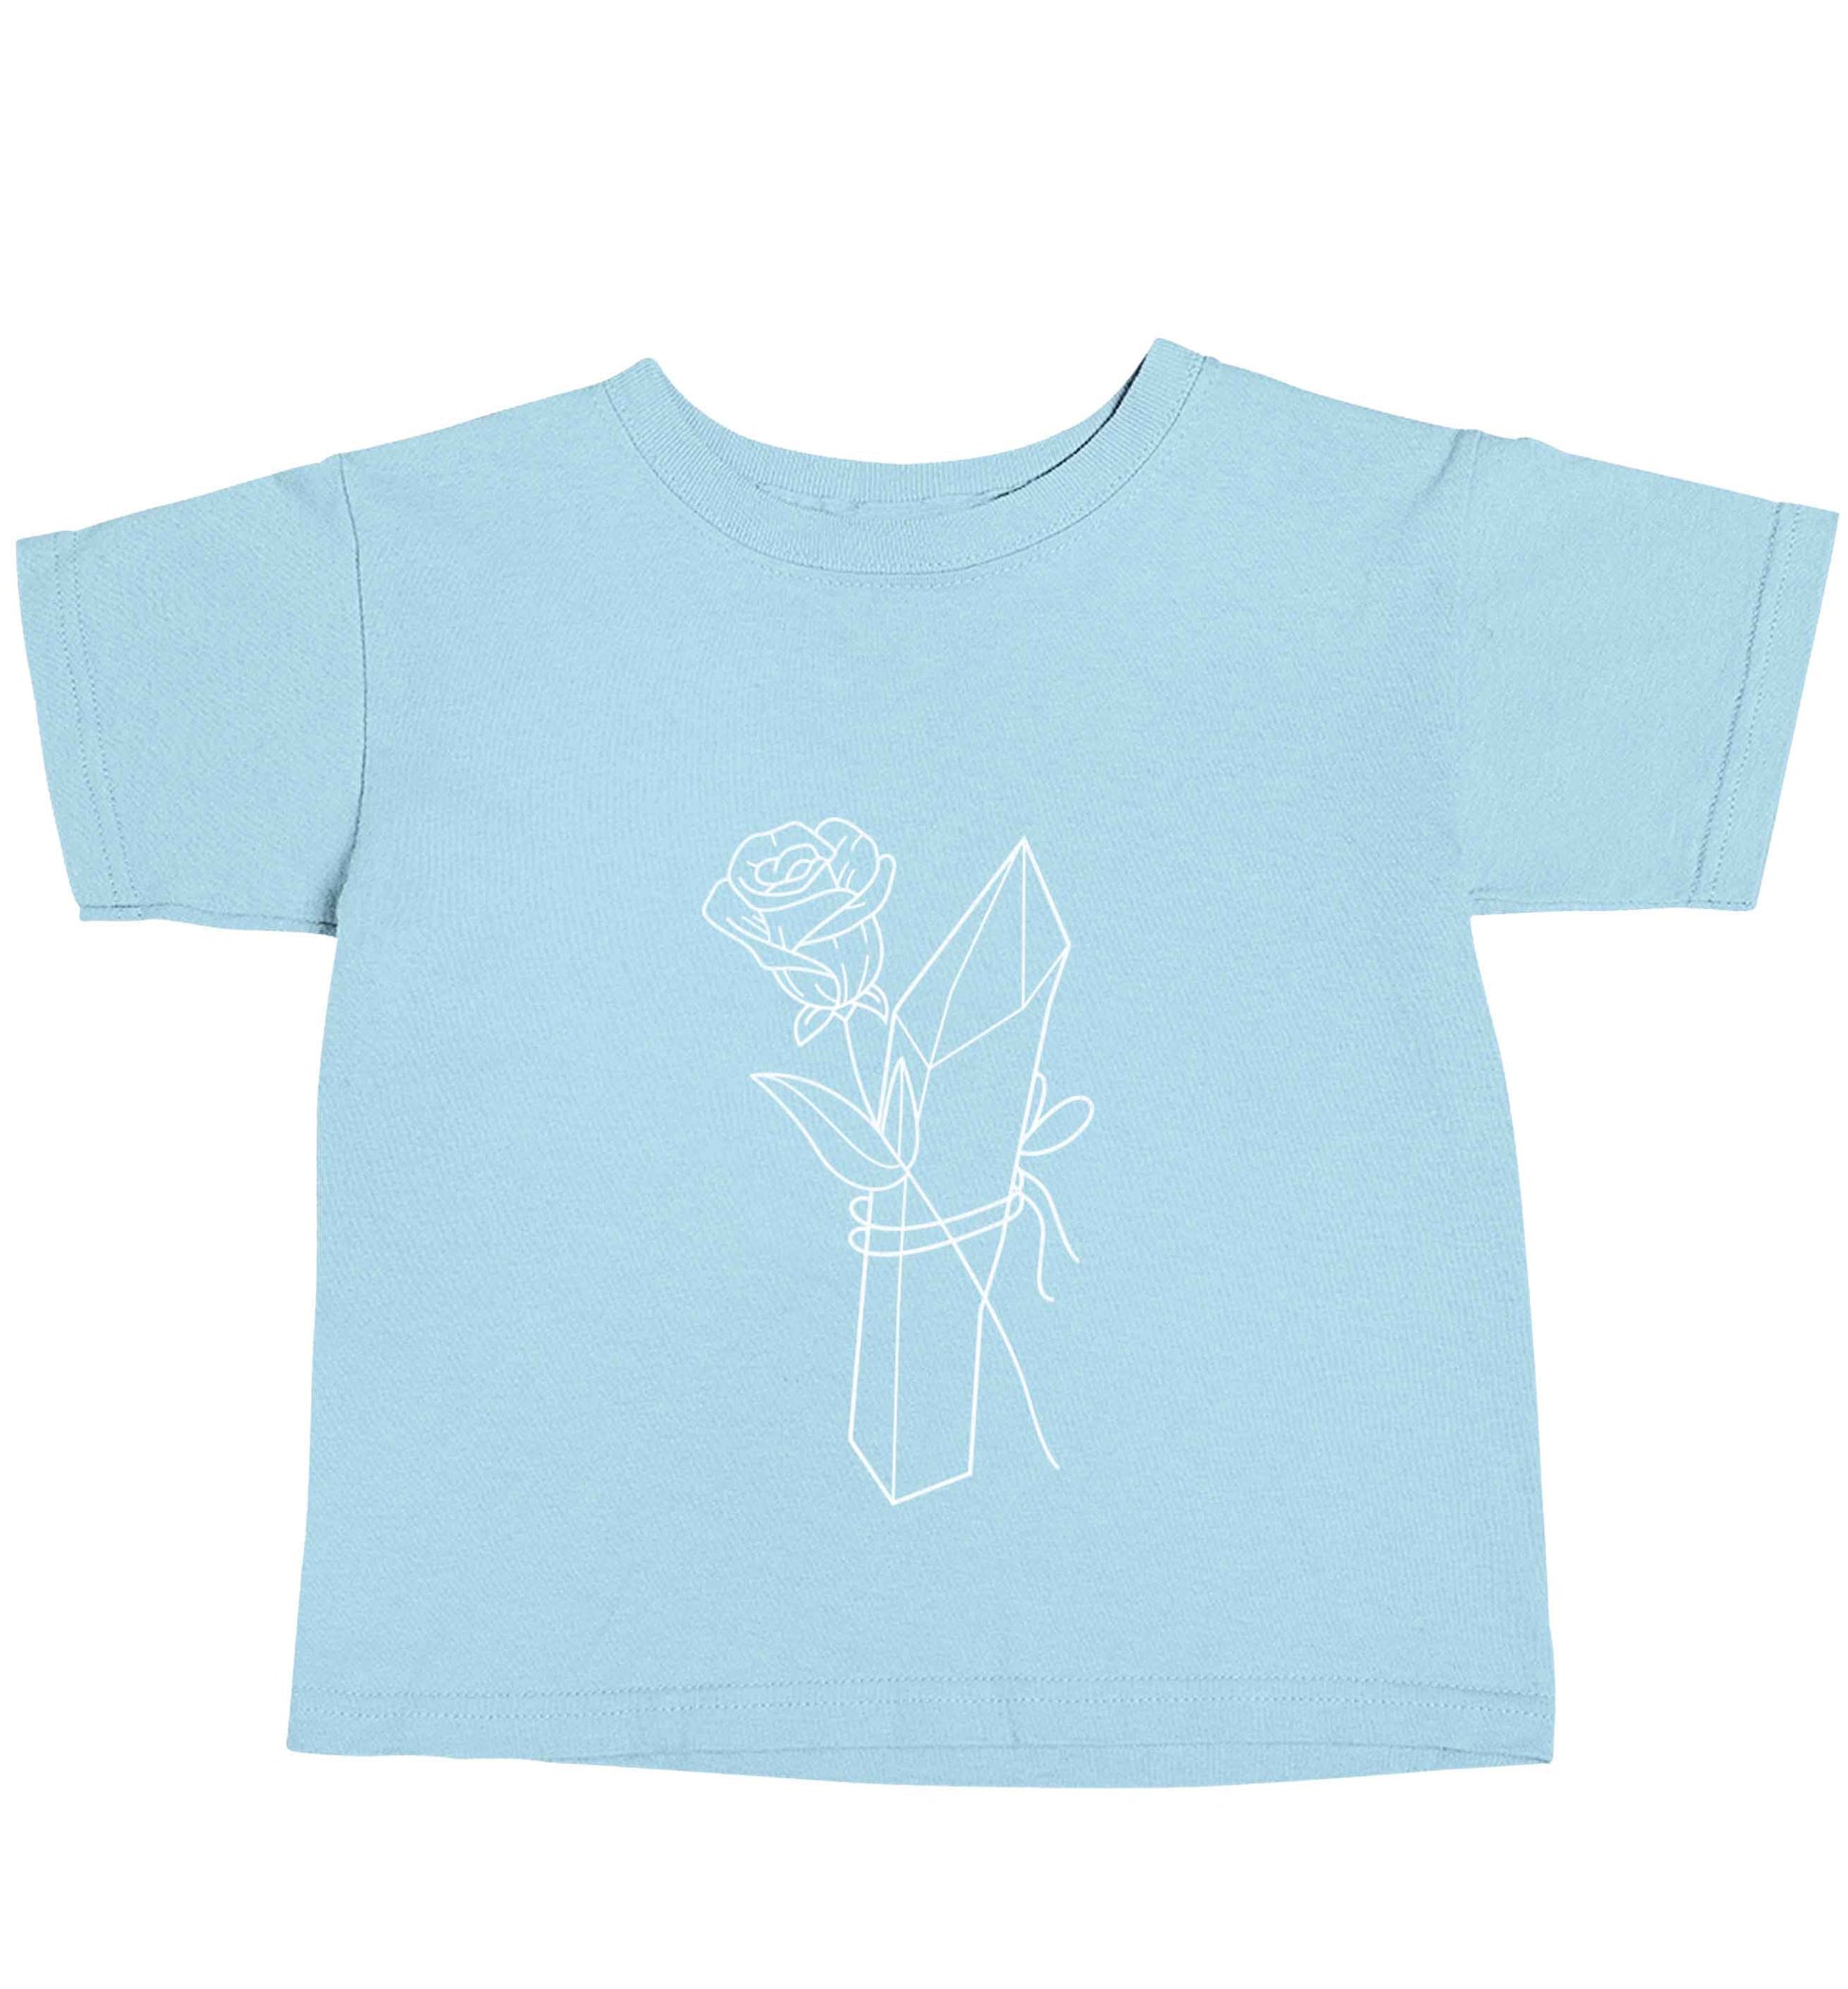 Rose crystal light blue baby toddler Tshirt 2 Years